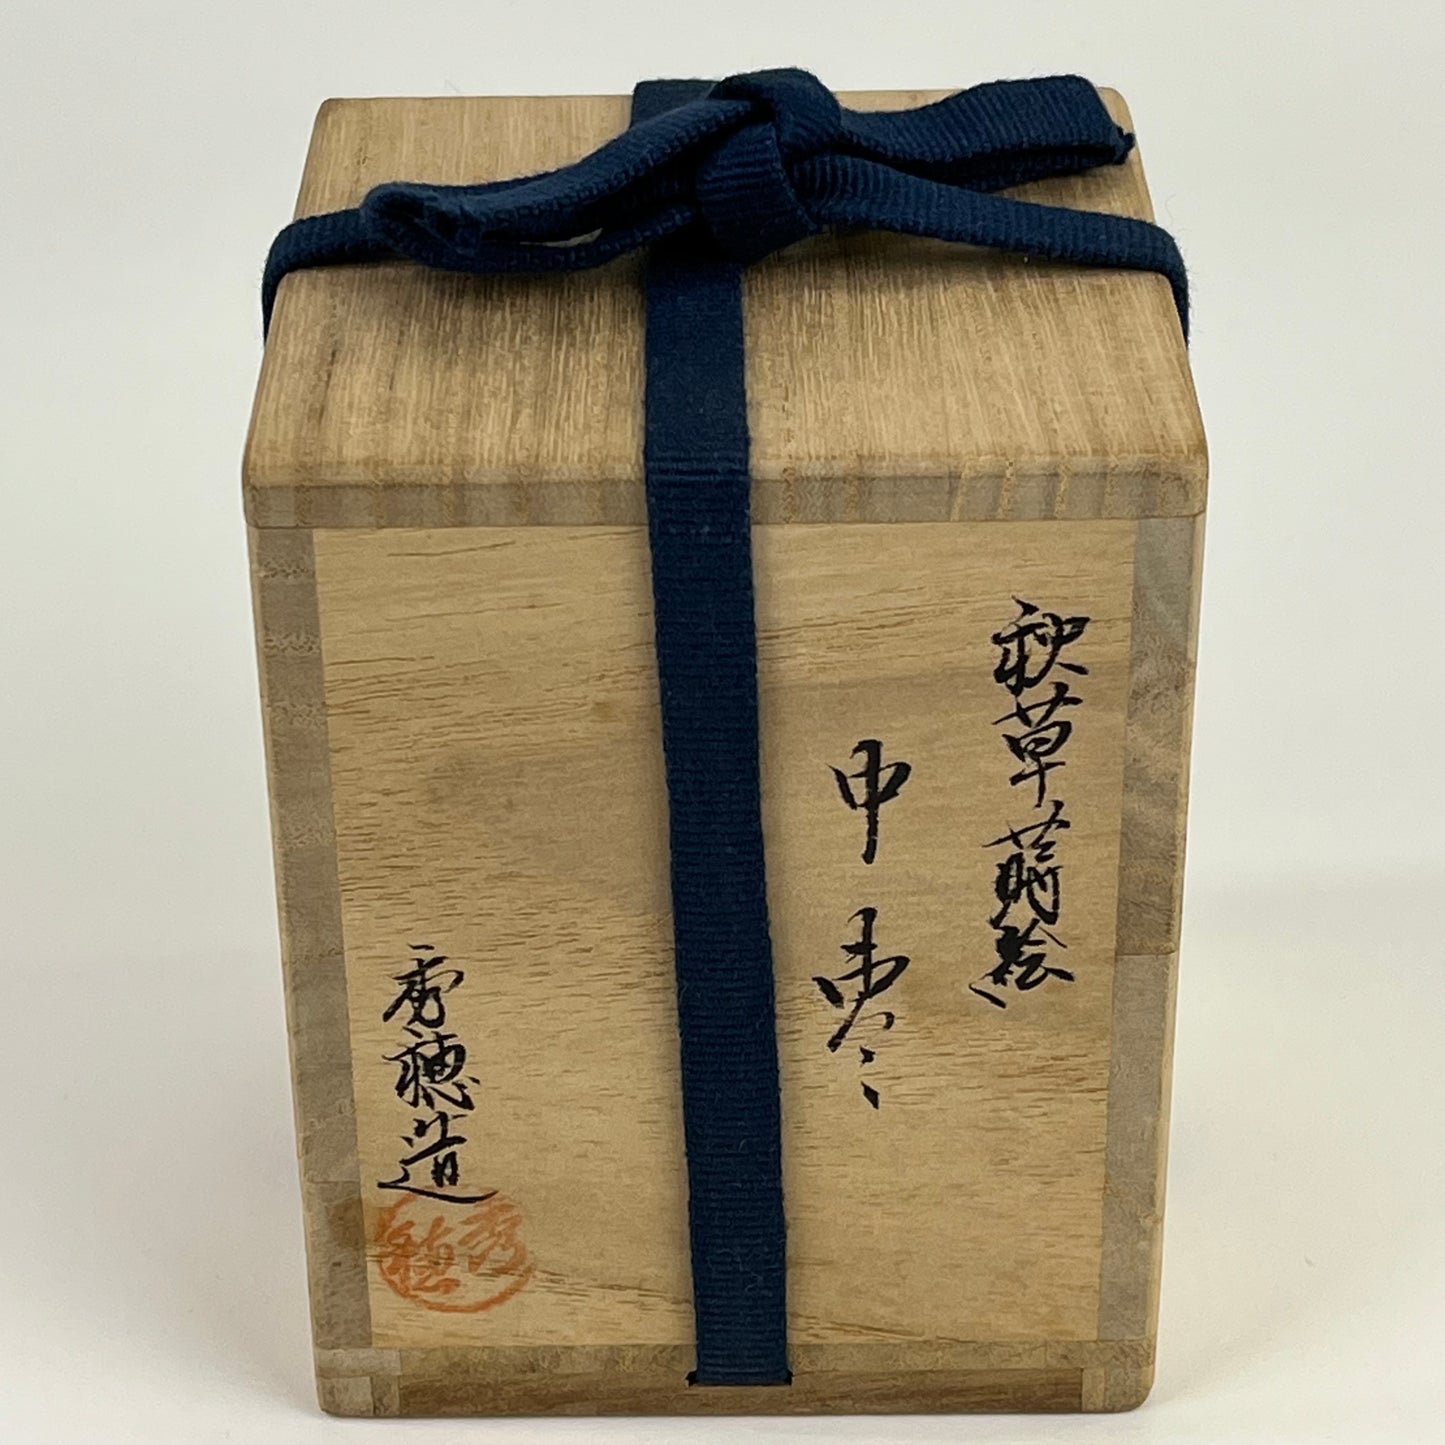 Vintage Japanese Baigetsu Natsume Tea Ceremony Caddy Signed 岡本 2.5”